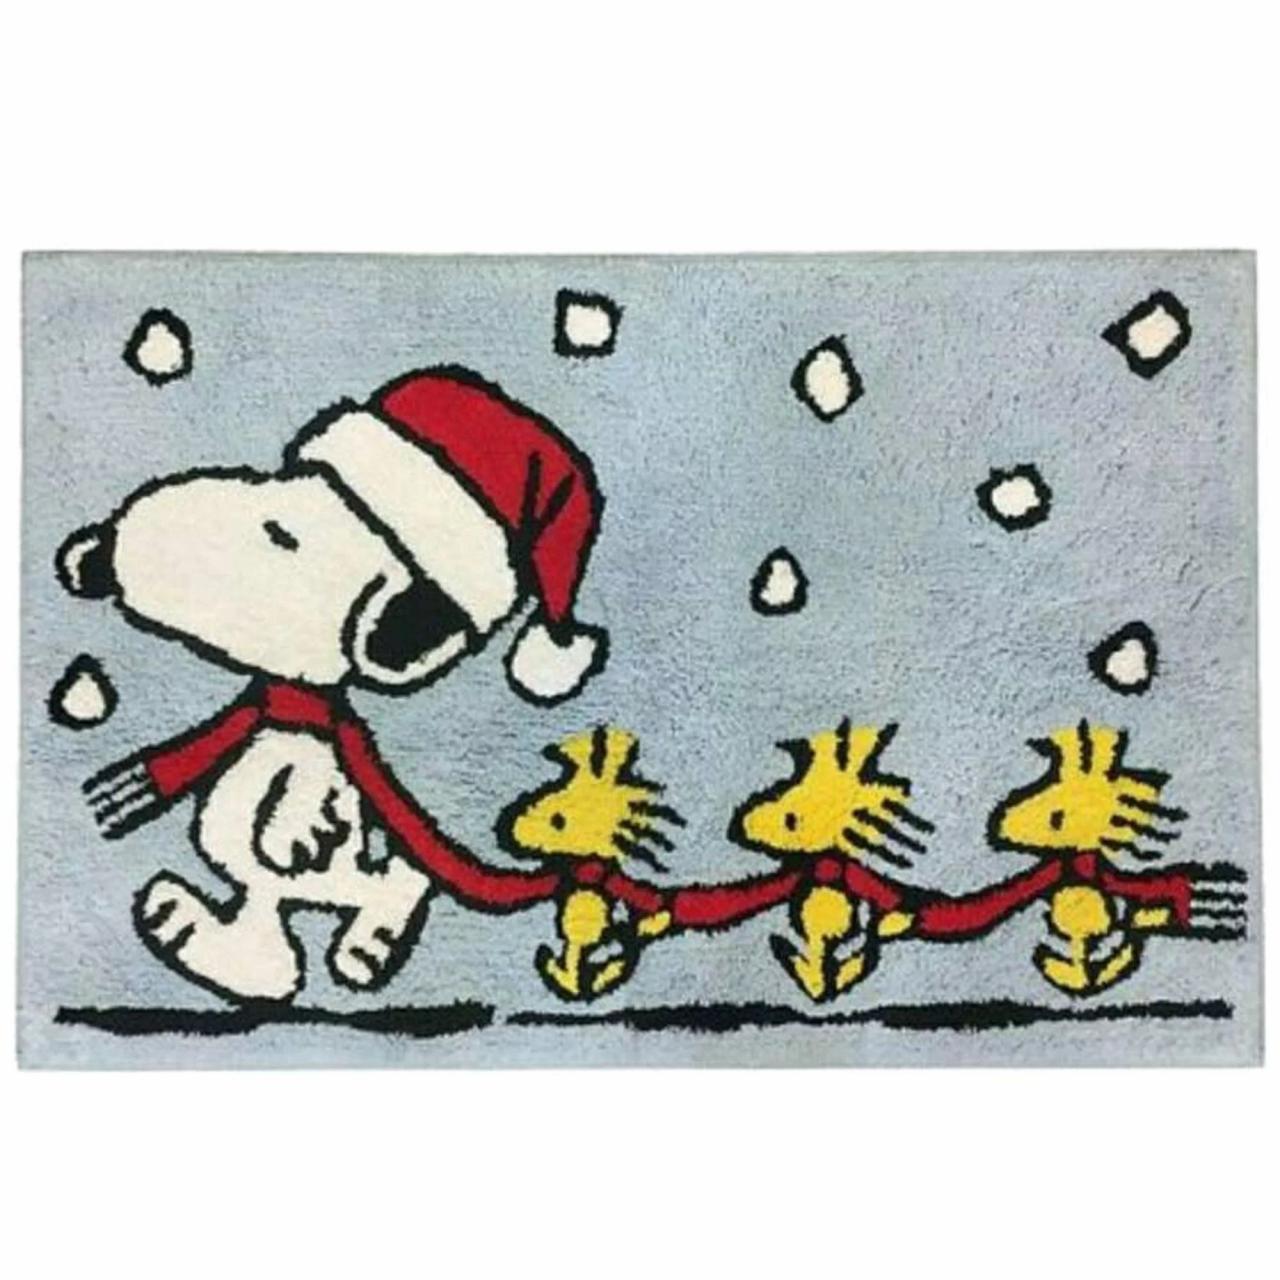 Peanuts Christmas Bath Rug, Snoopy & Woodstock Design 20 x 30 Inches